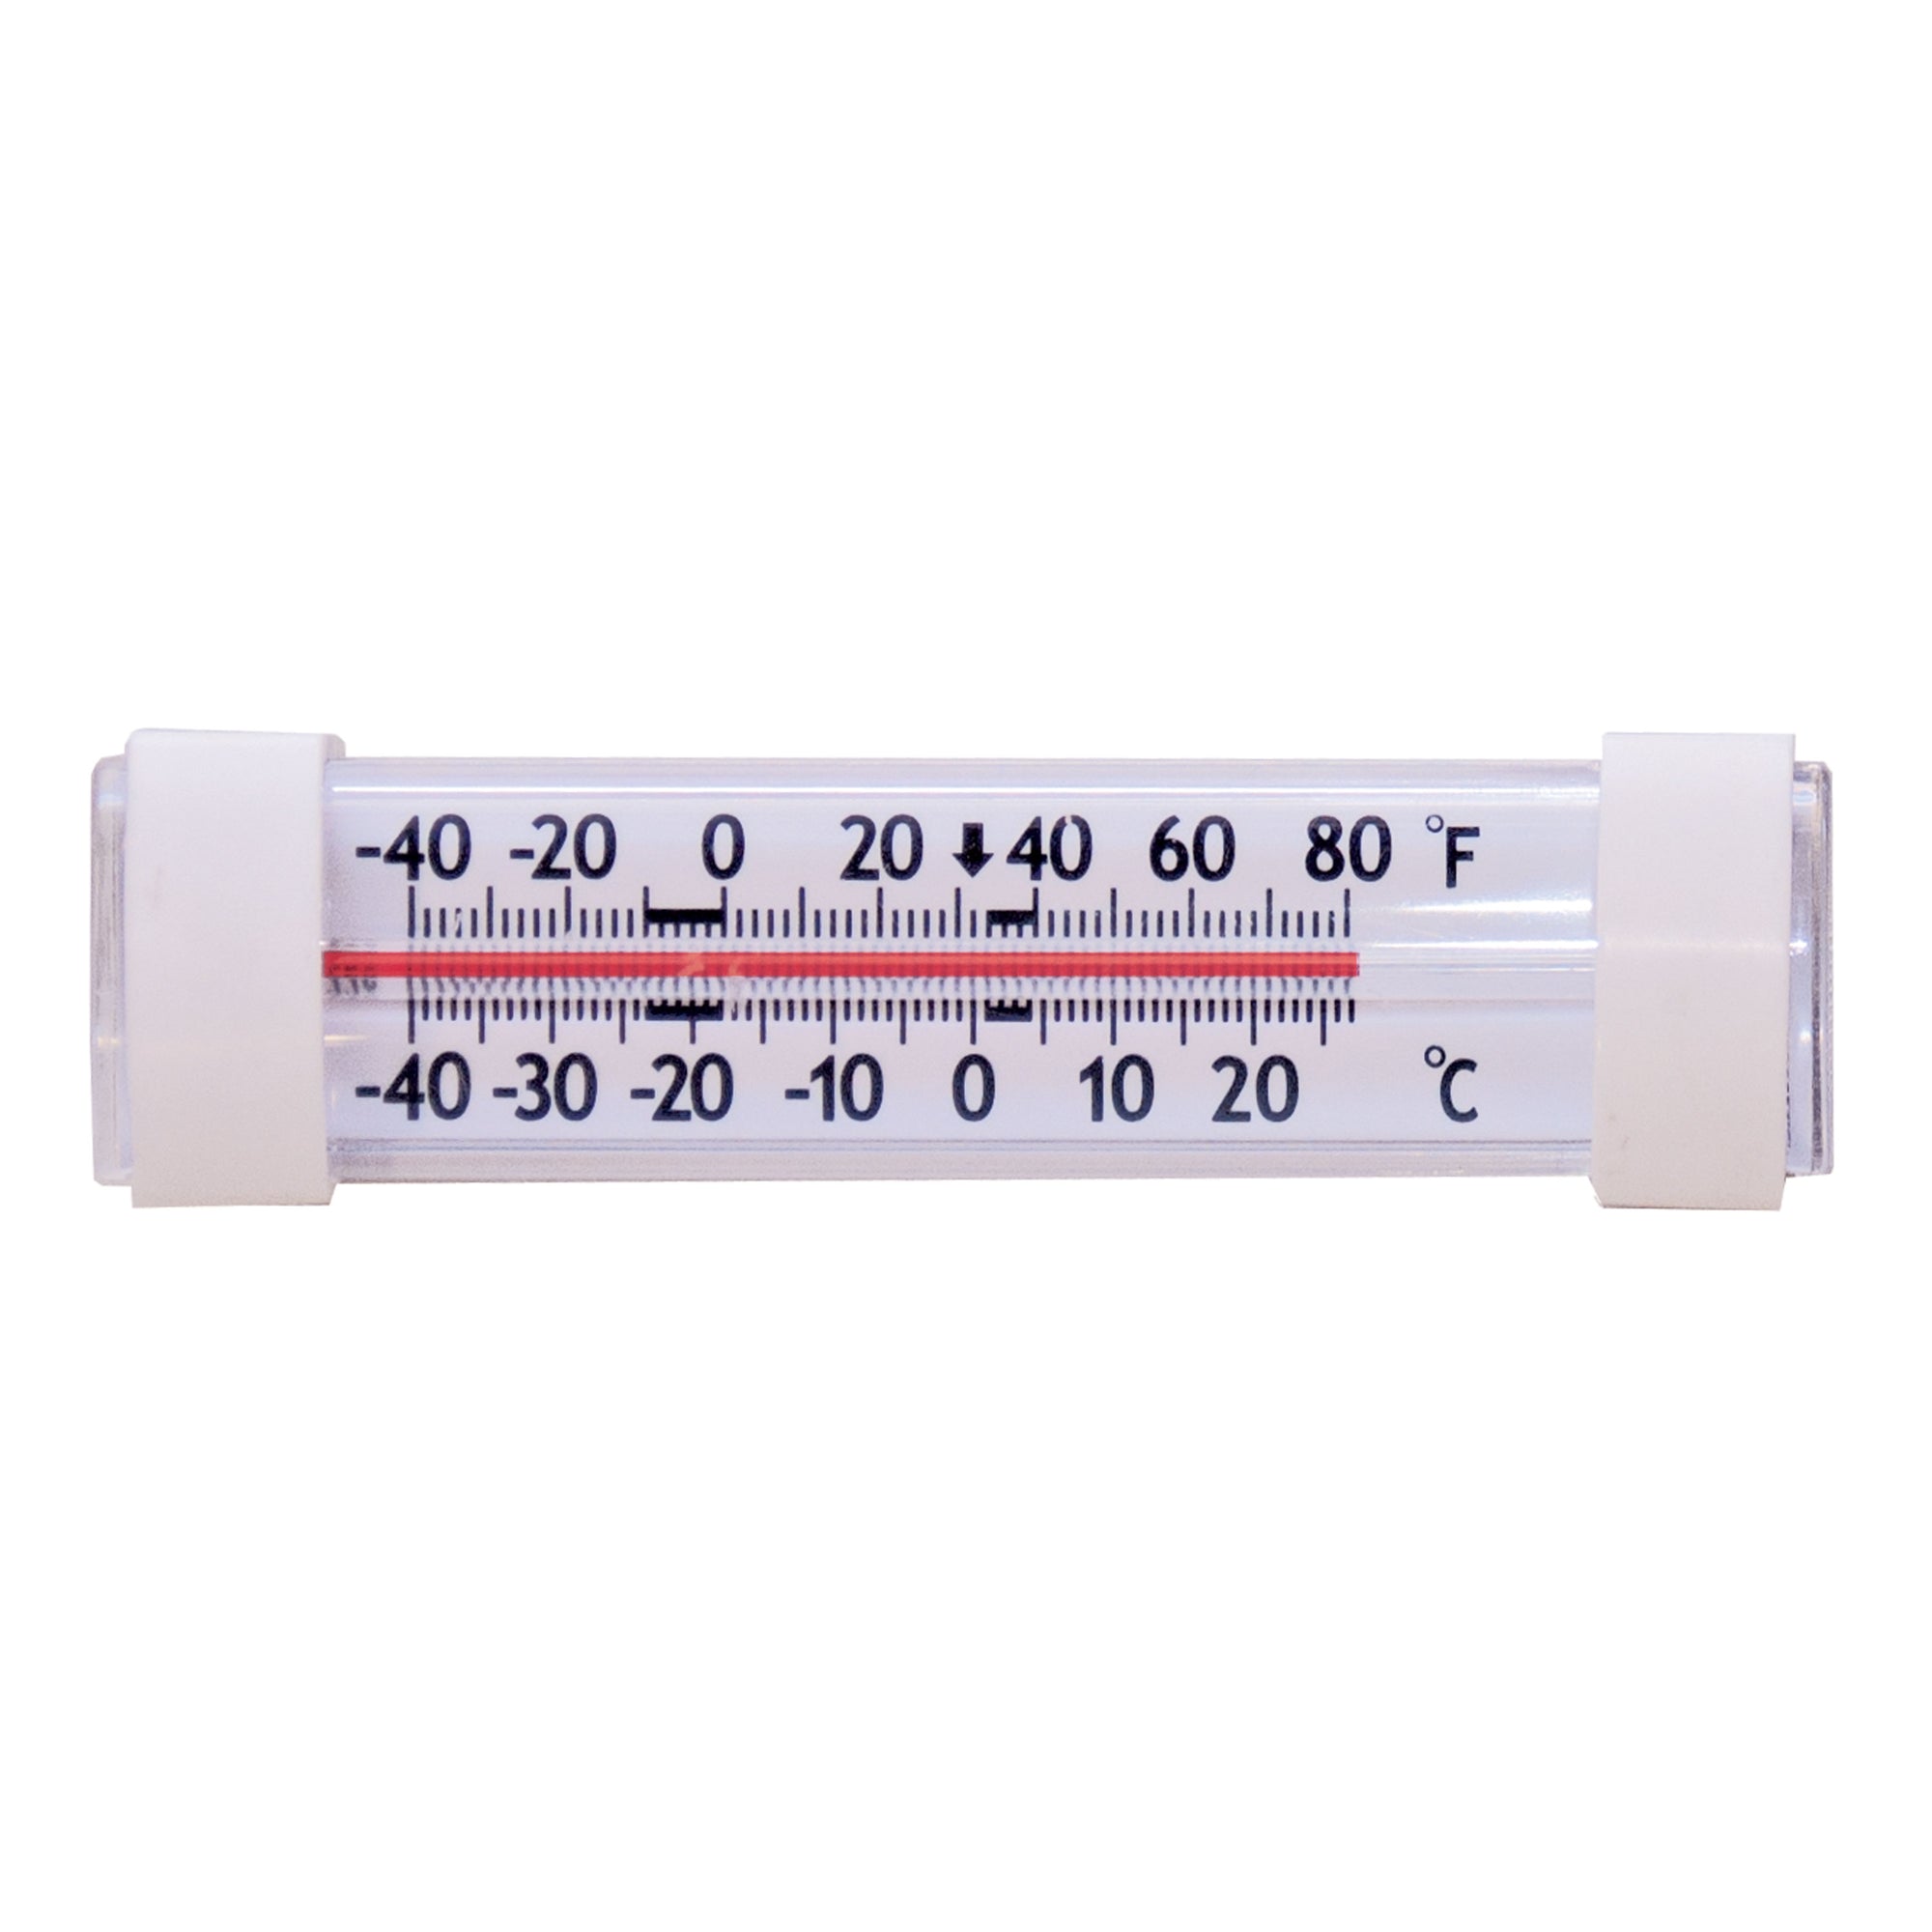 Prime Products 12-3032 Horizontal Refrigerator/Freezer Thermometer